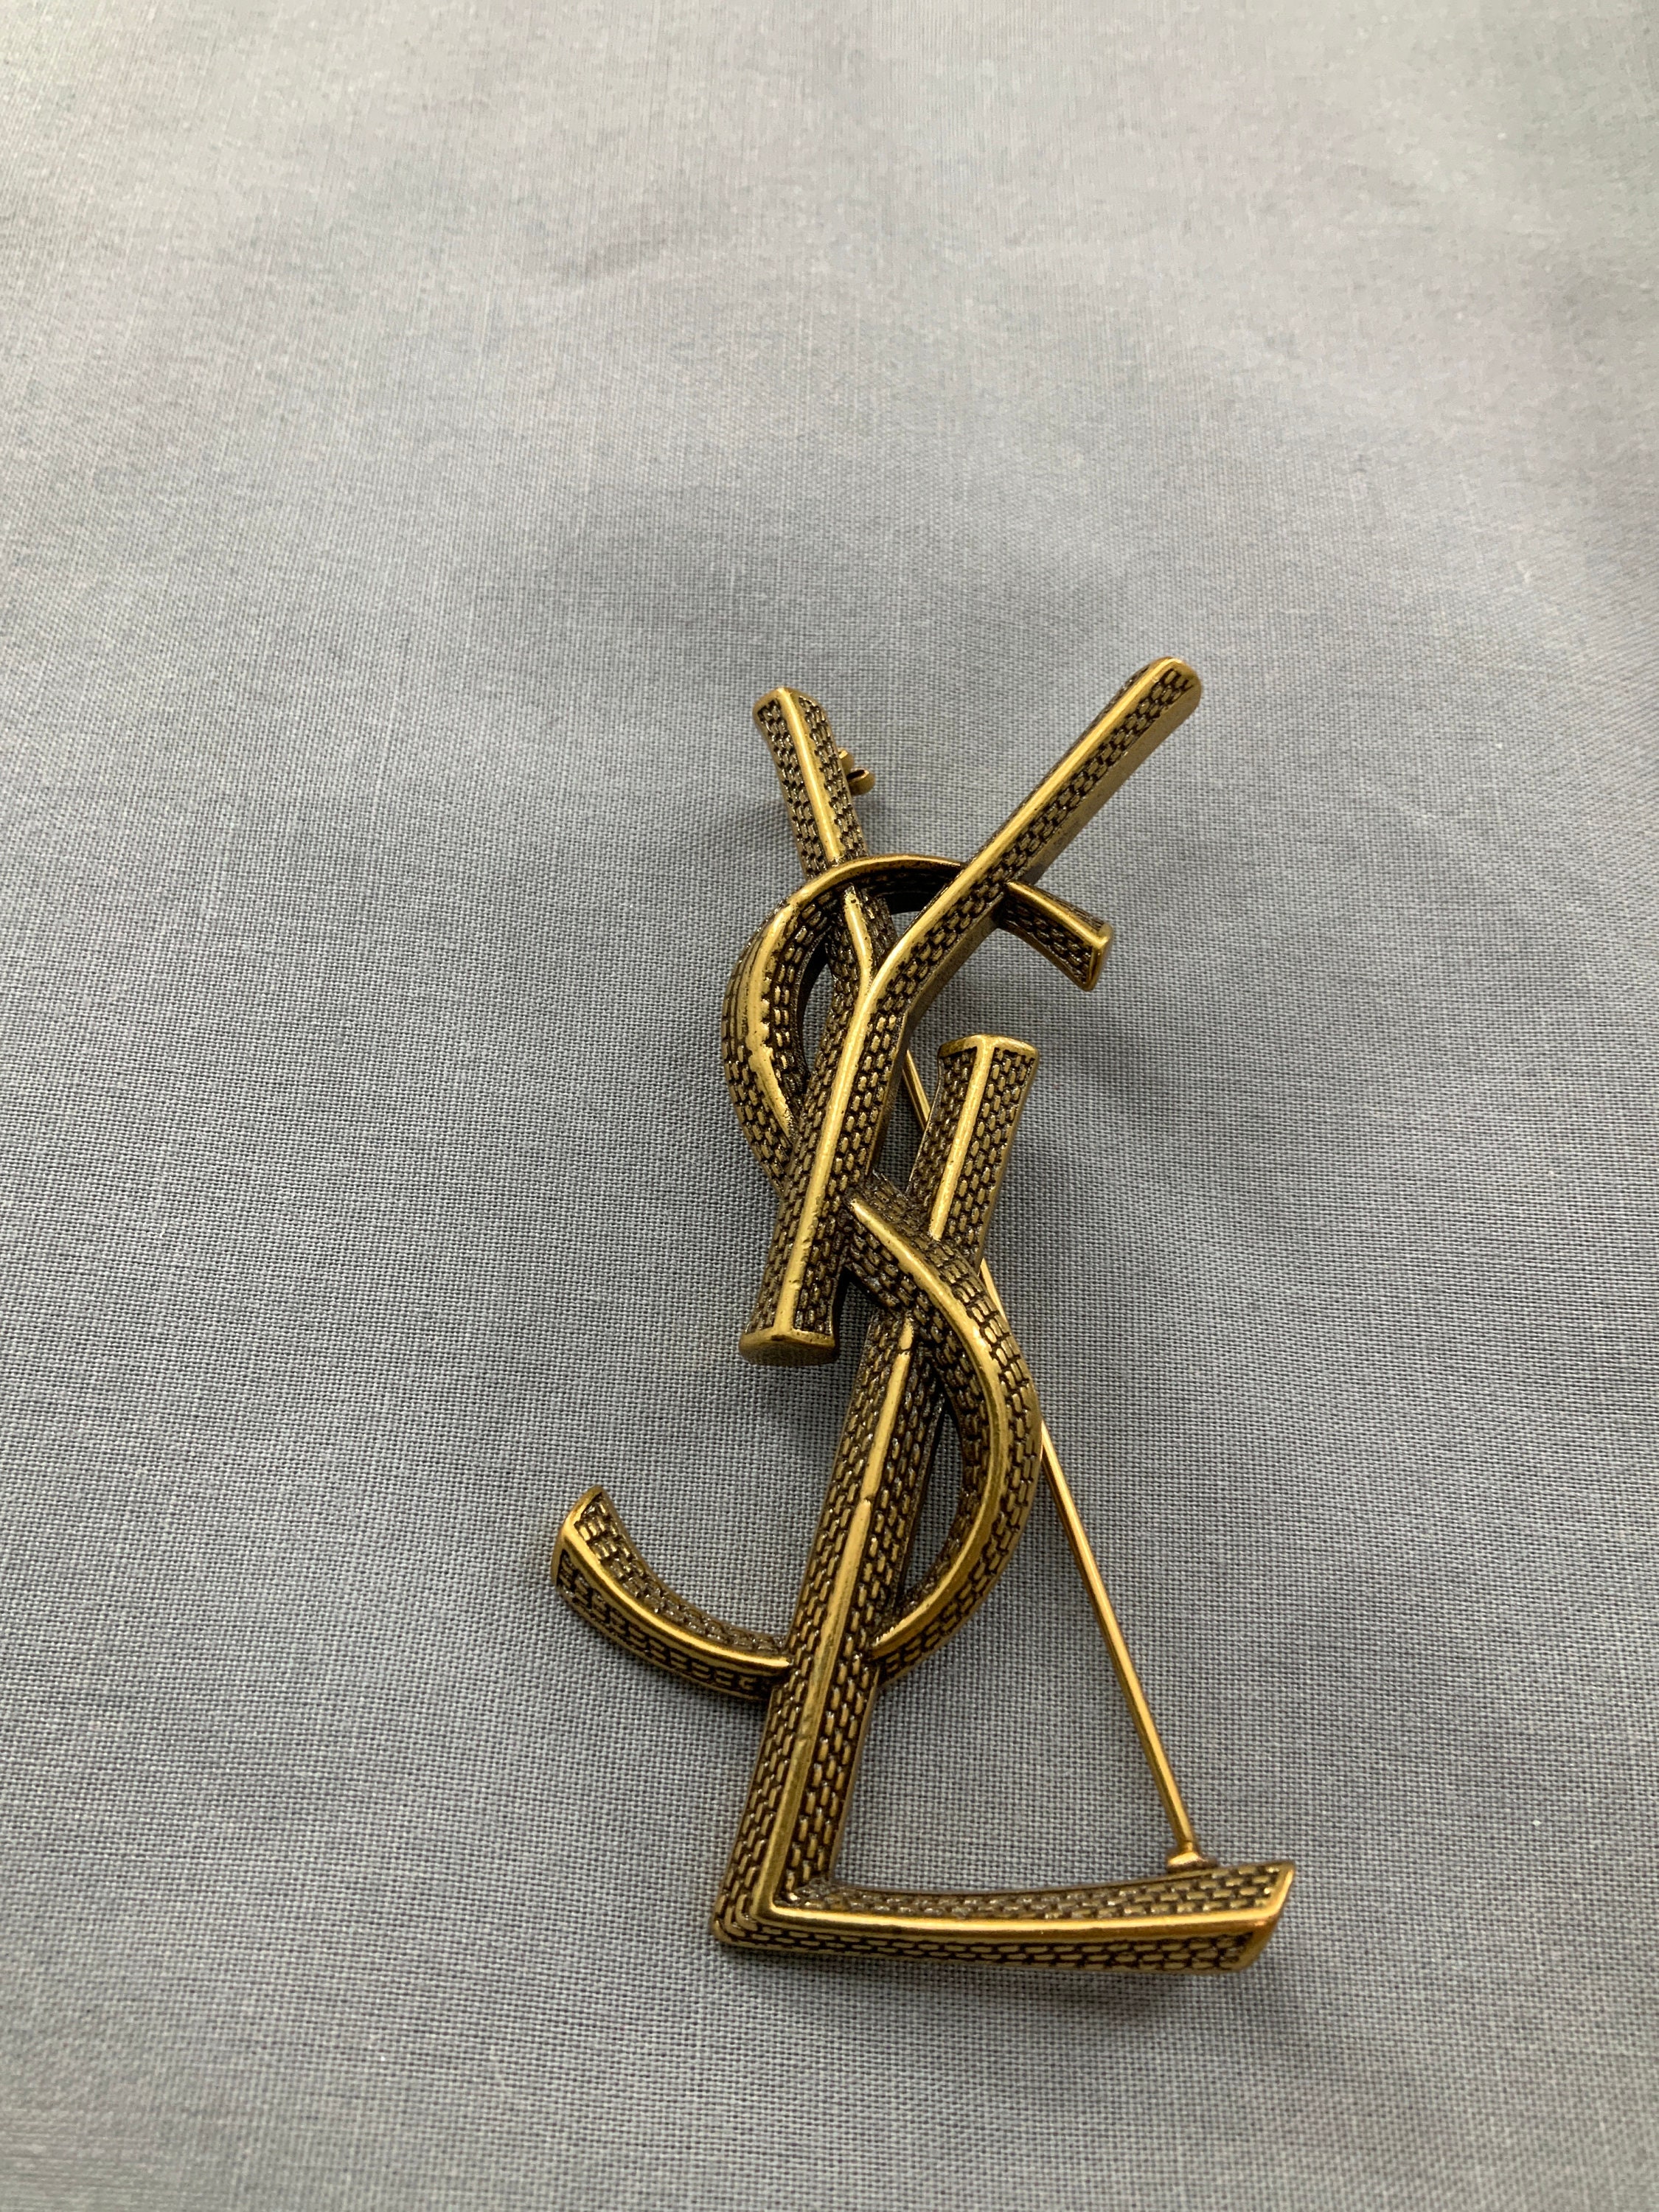 🌹New Vintage Yves Saint Laurent Pin Brooch Name Tag